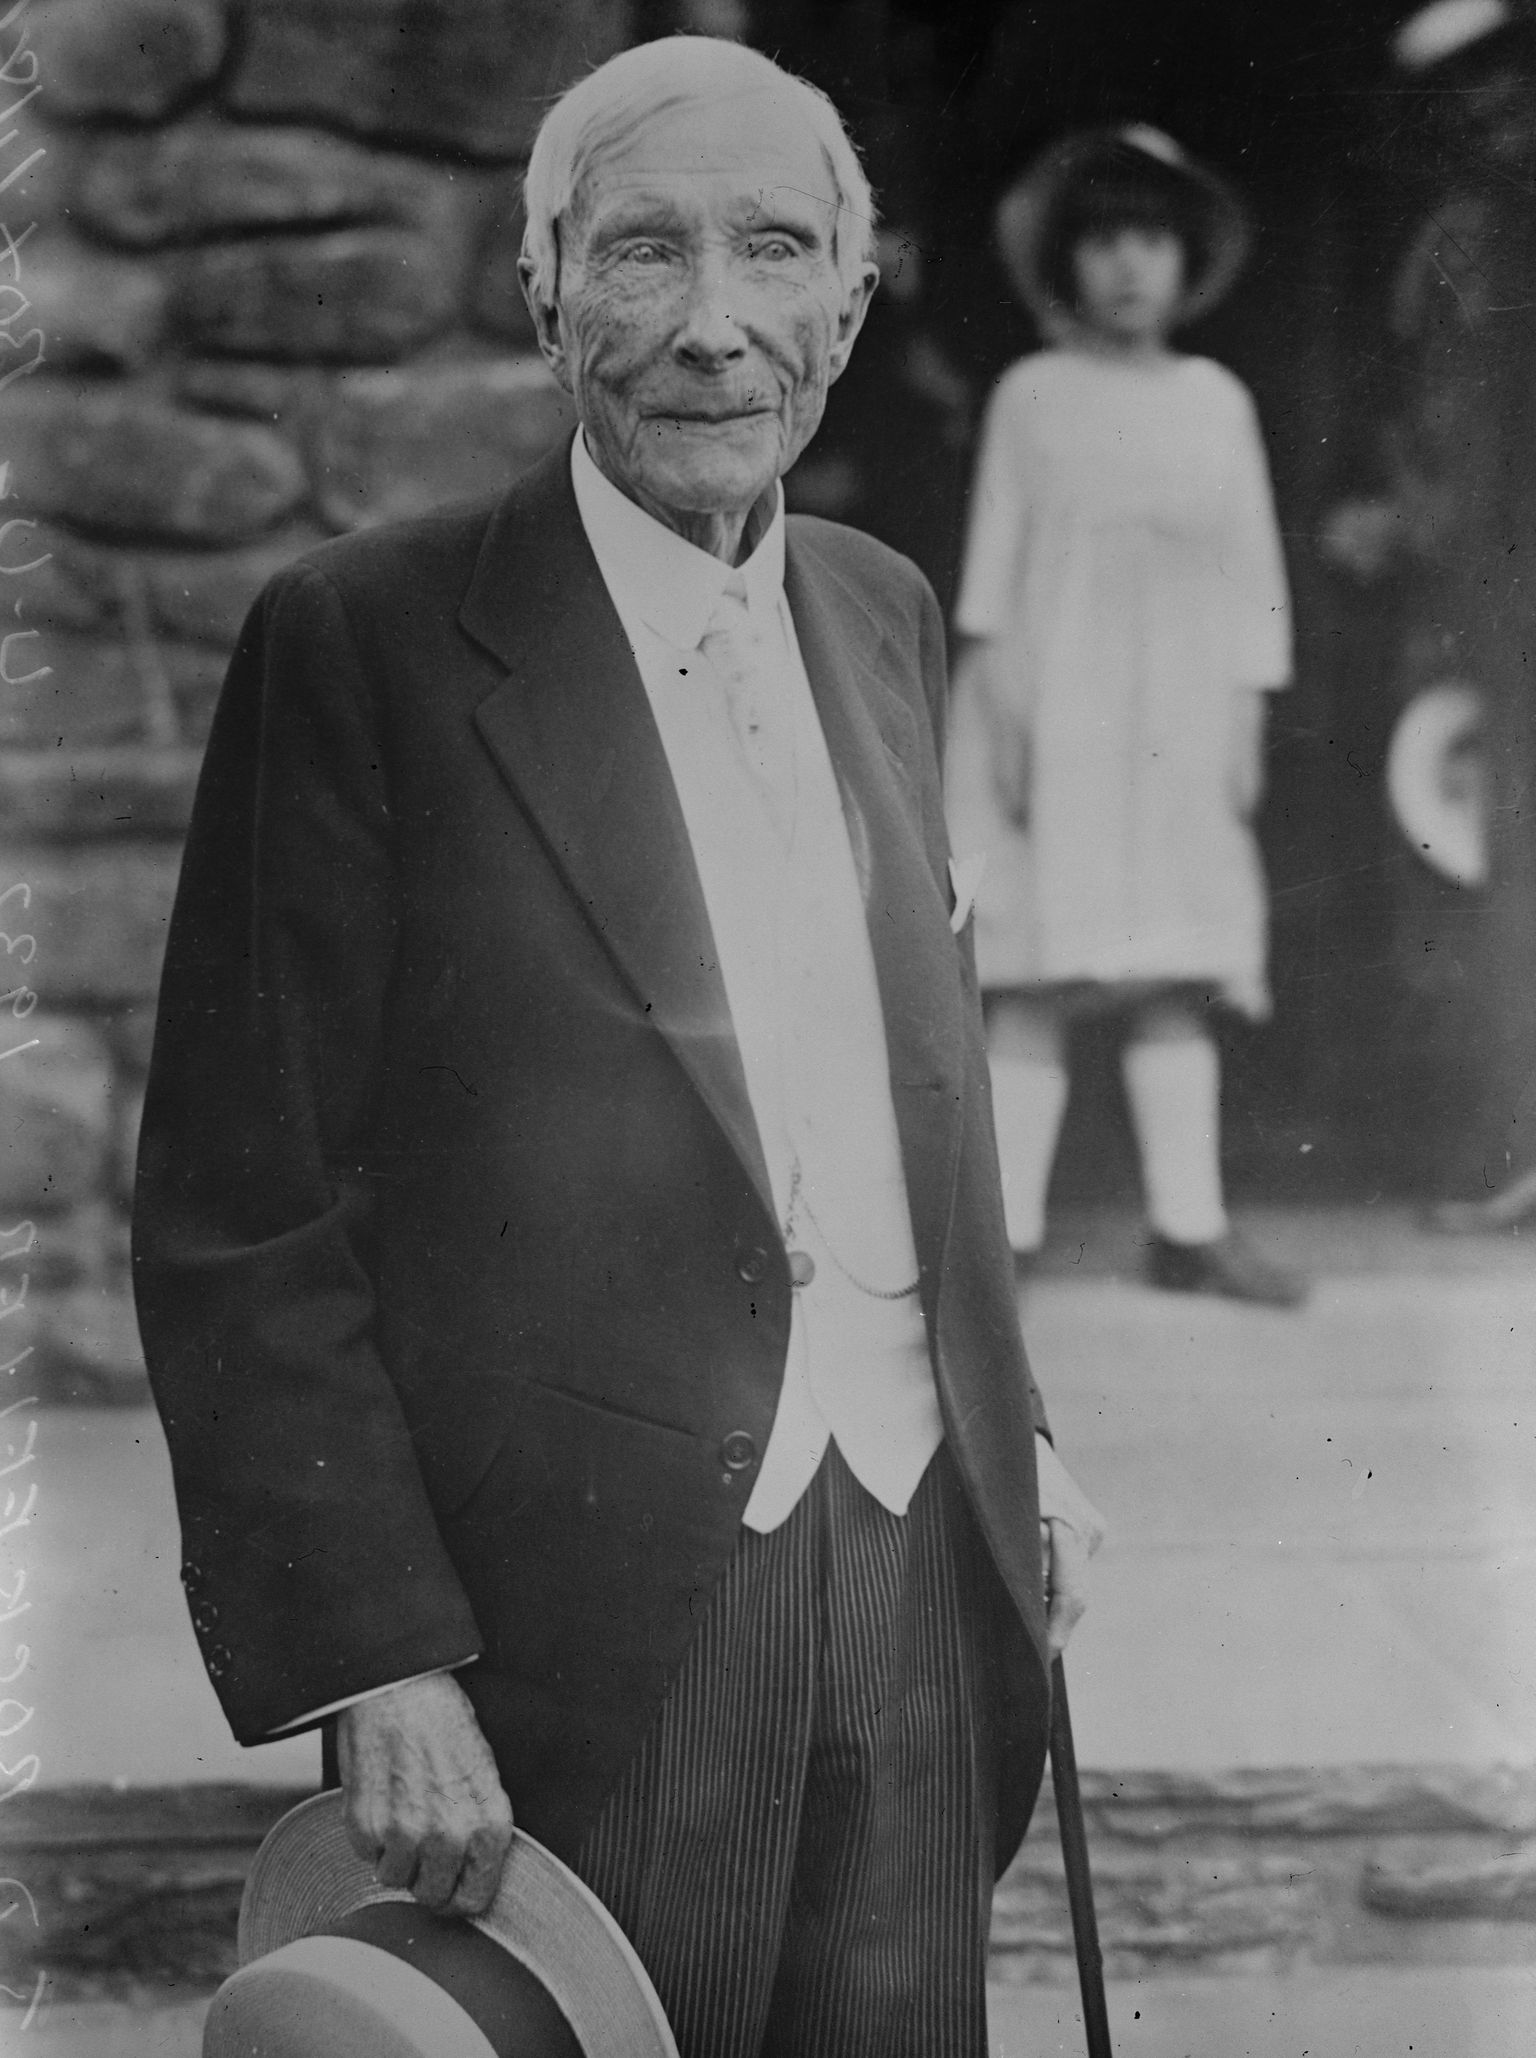 Mr J D Rockefeller ill .
Mr John D Rockefeller , the multi millionaire oil magnate , has a cold . He is 92 years of age .
28 January 1932